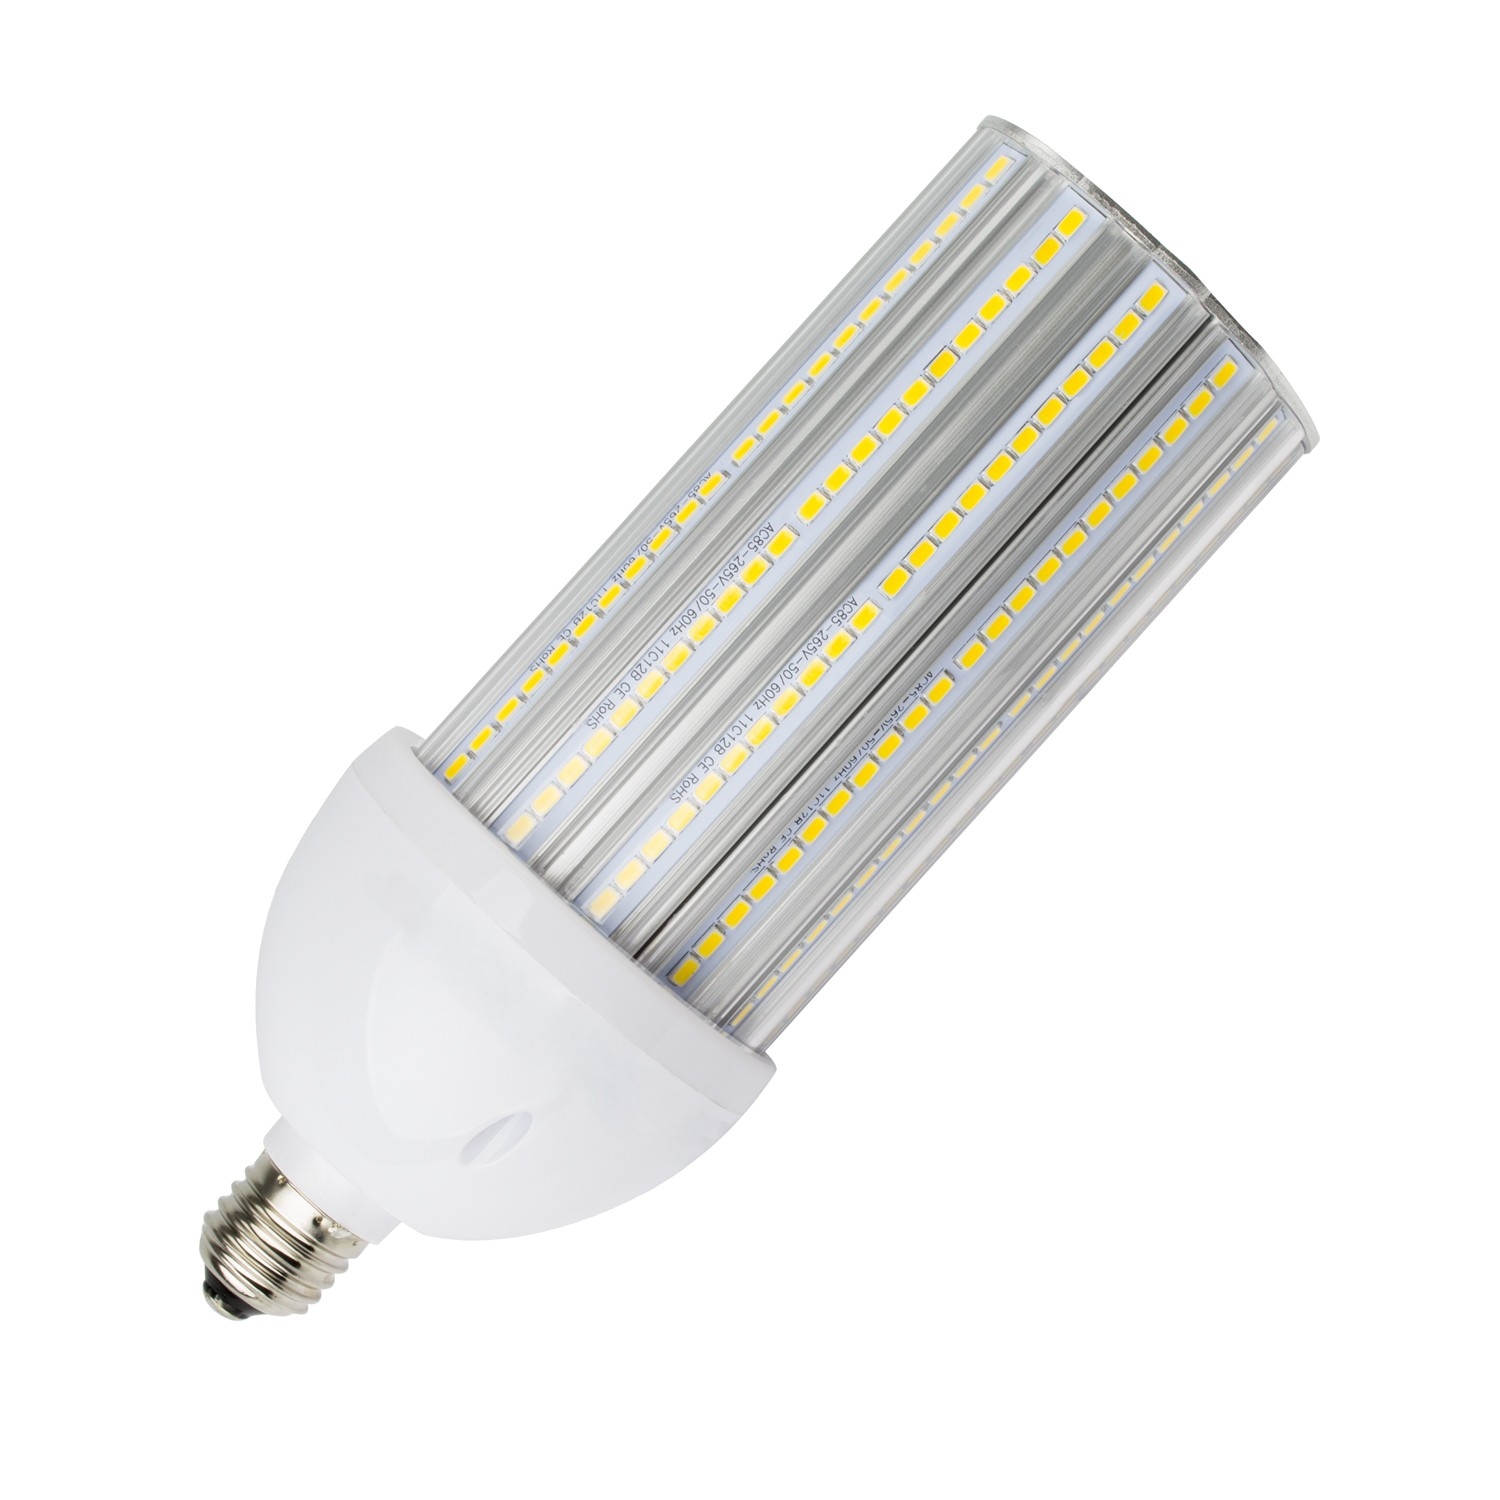 overlook Re-shoot Make it heavy E27 40W LED Corn Lamp (IP64) for Public Lighting - Ledkia